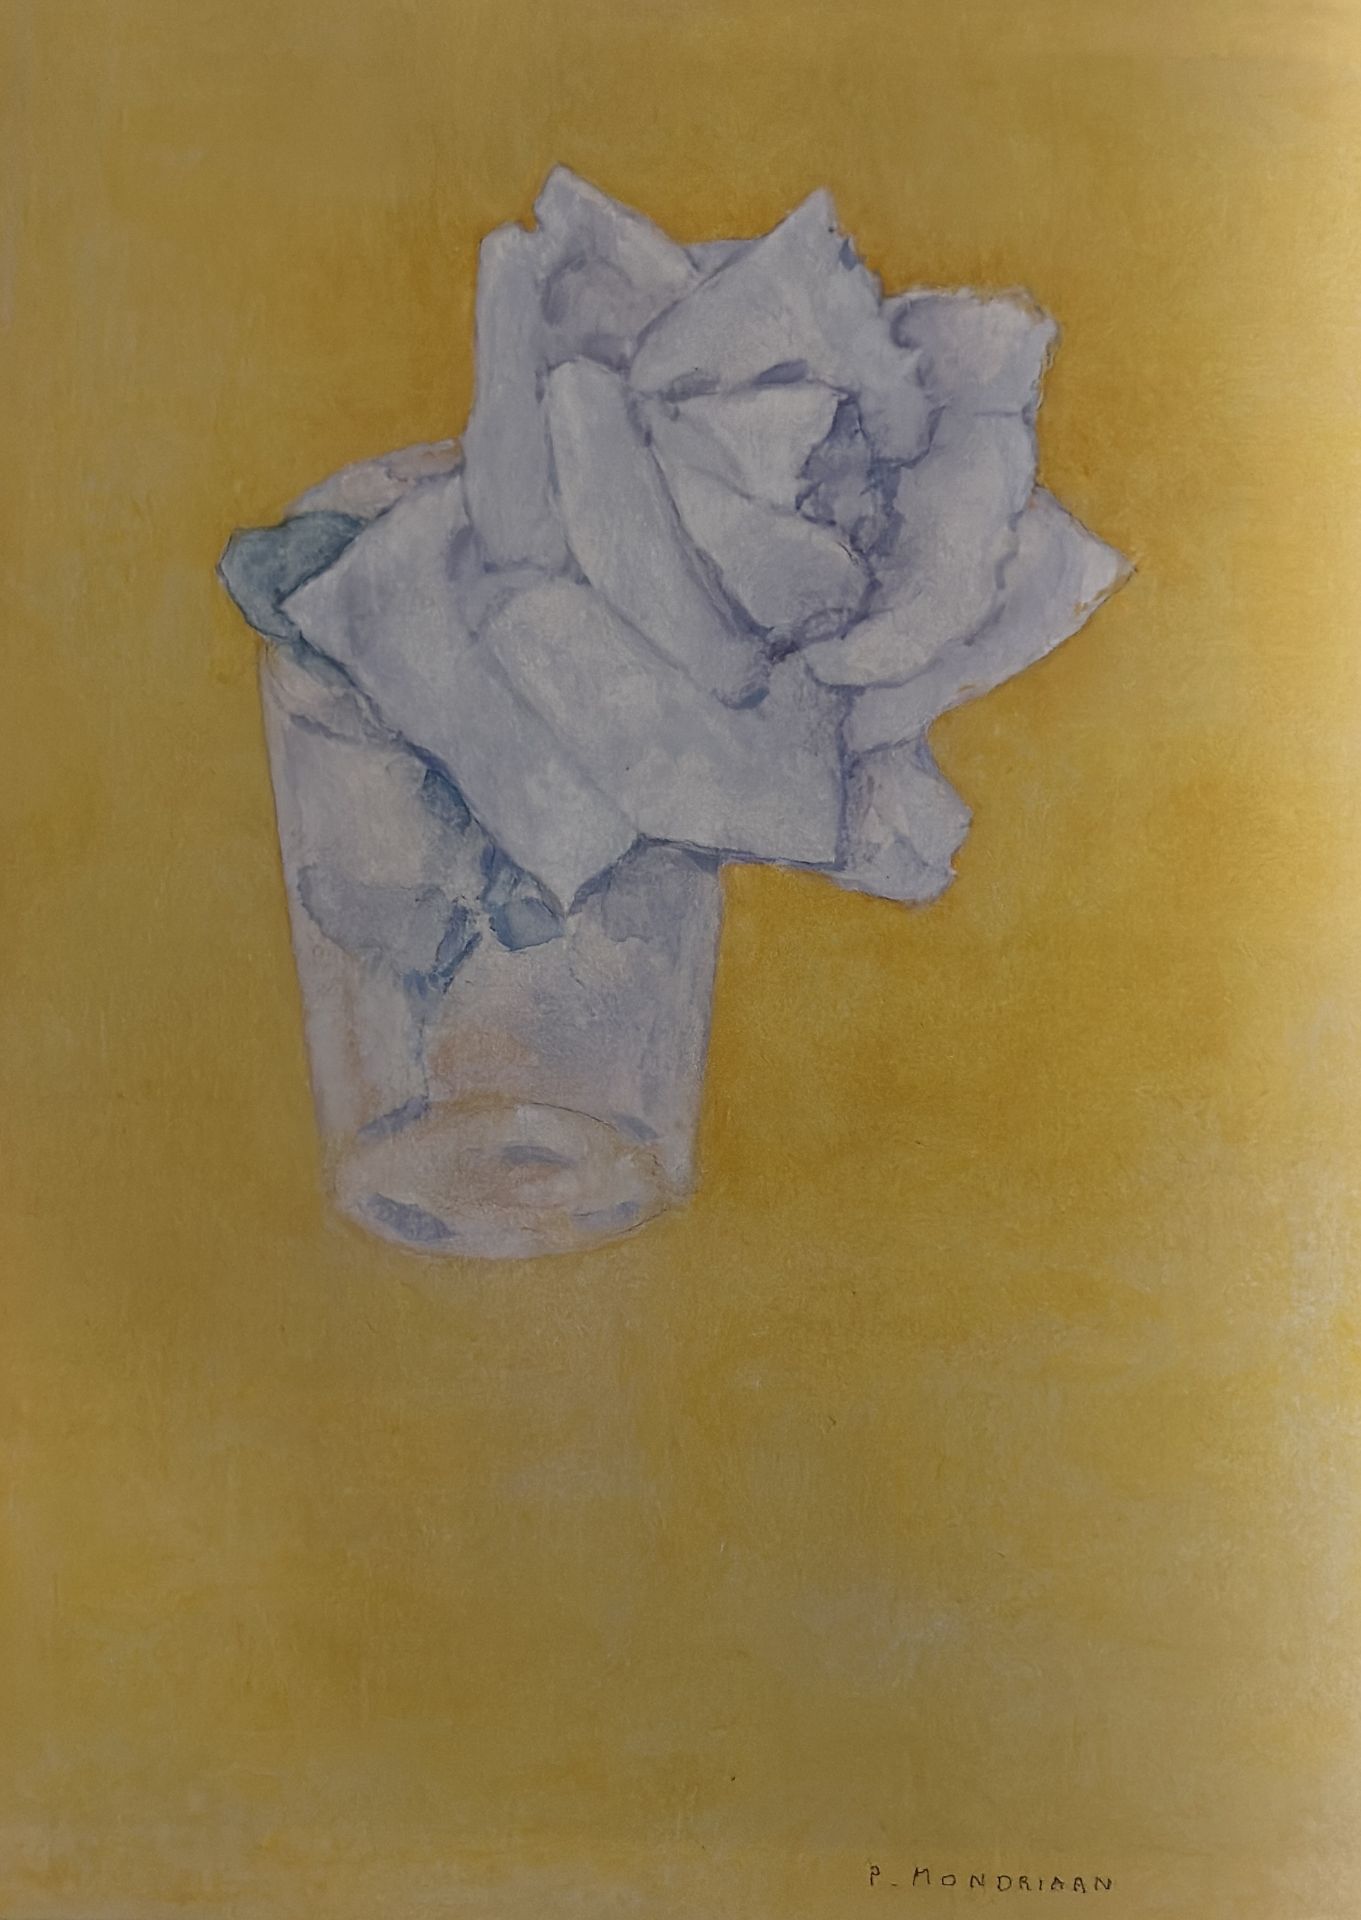 Piet Mondrian "Rose in a Glass, 1921" Print. 